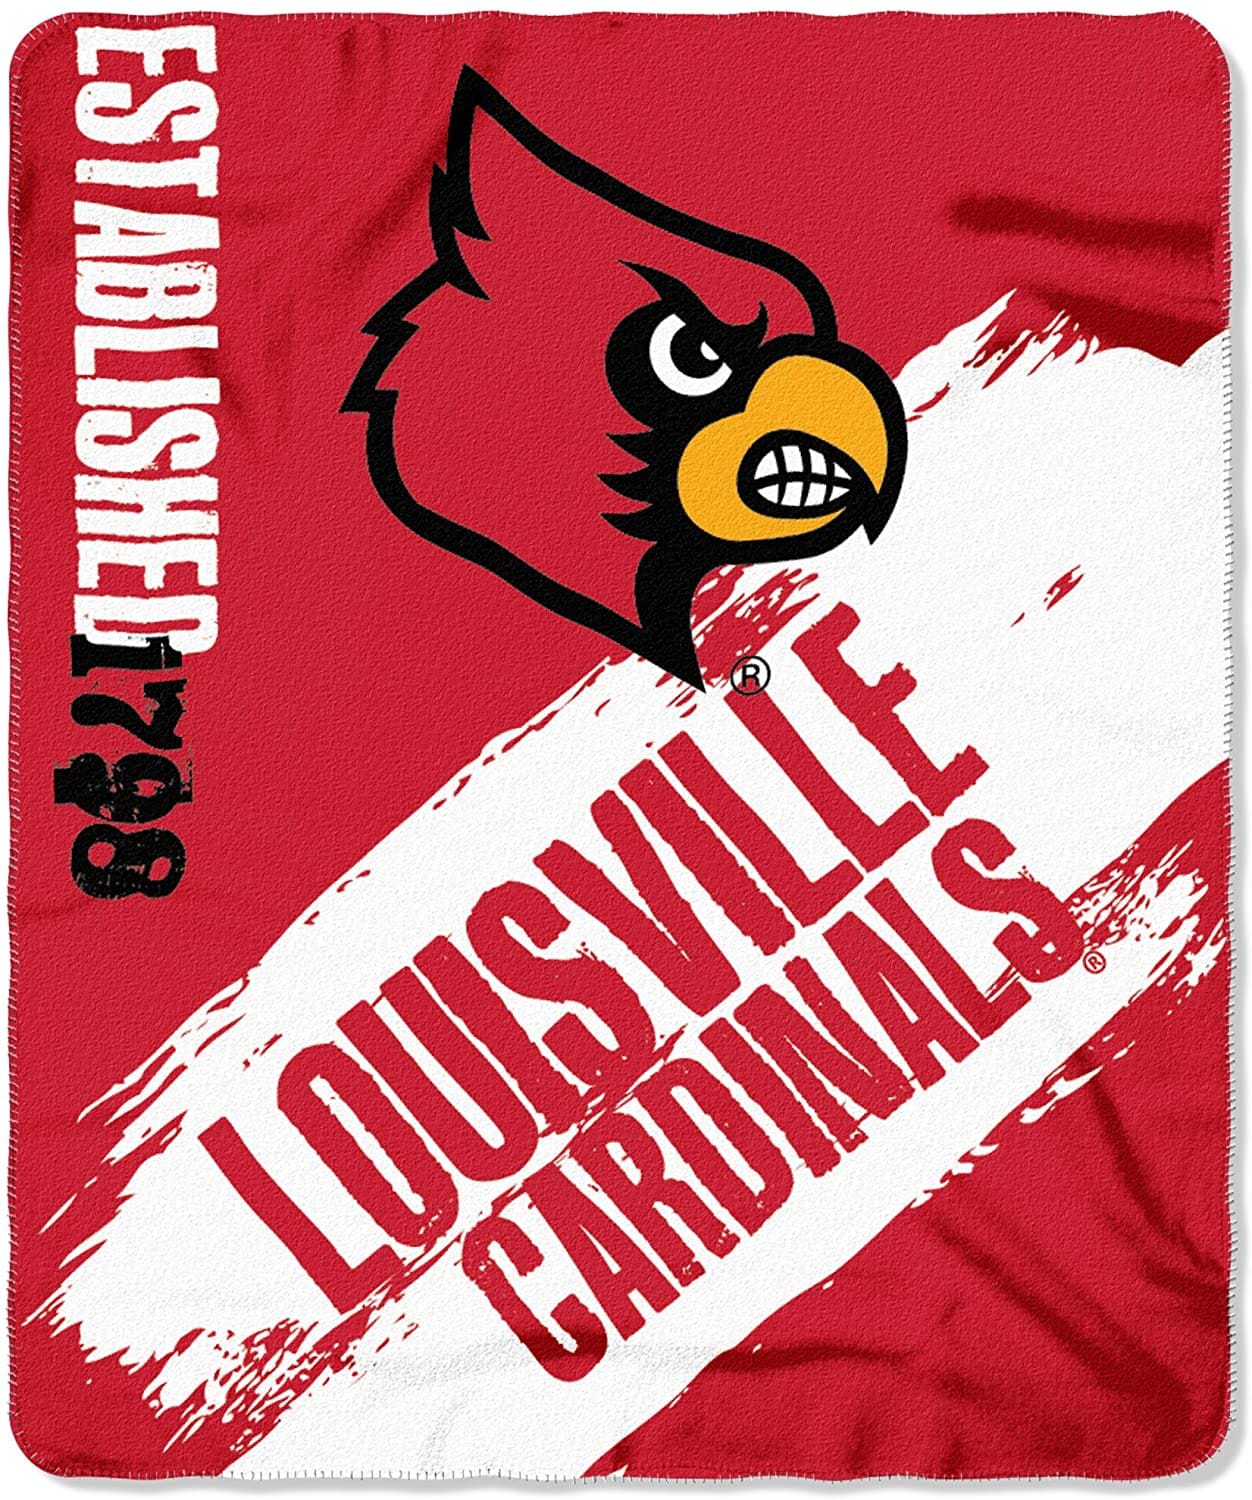 Officially Licensed Ncaa Printed Throw Louisville Cardinals Fleece Blanket